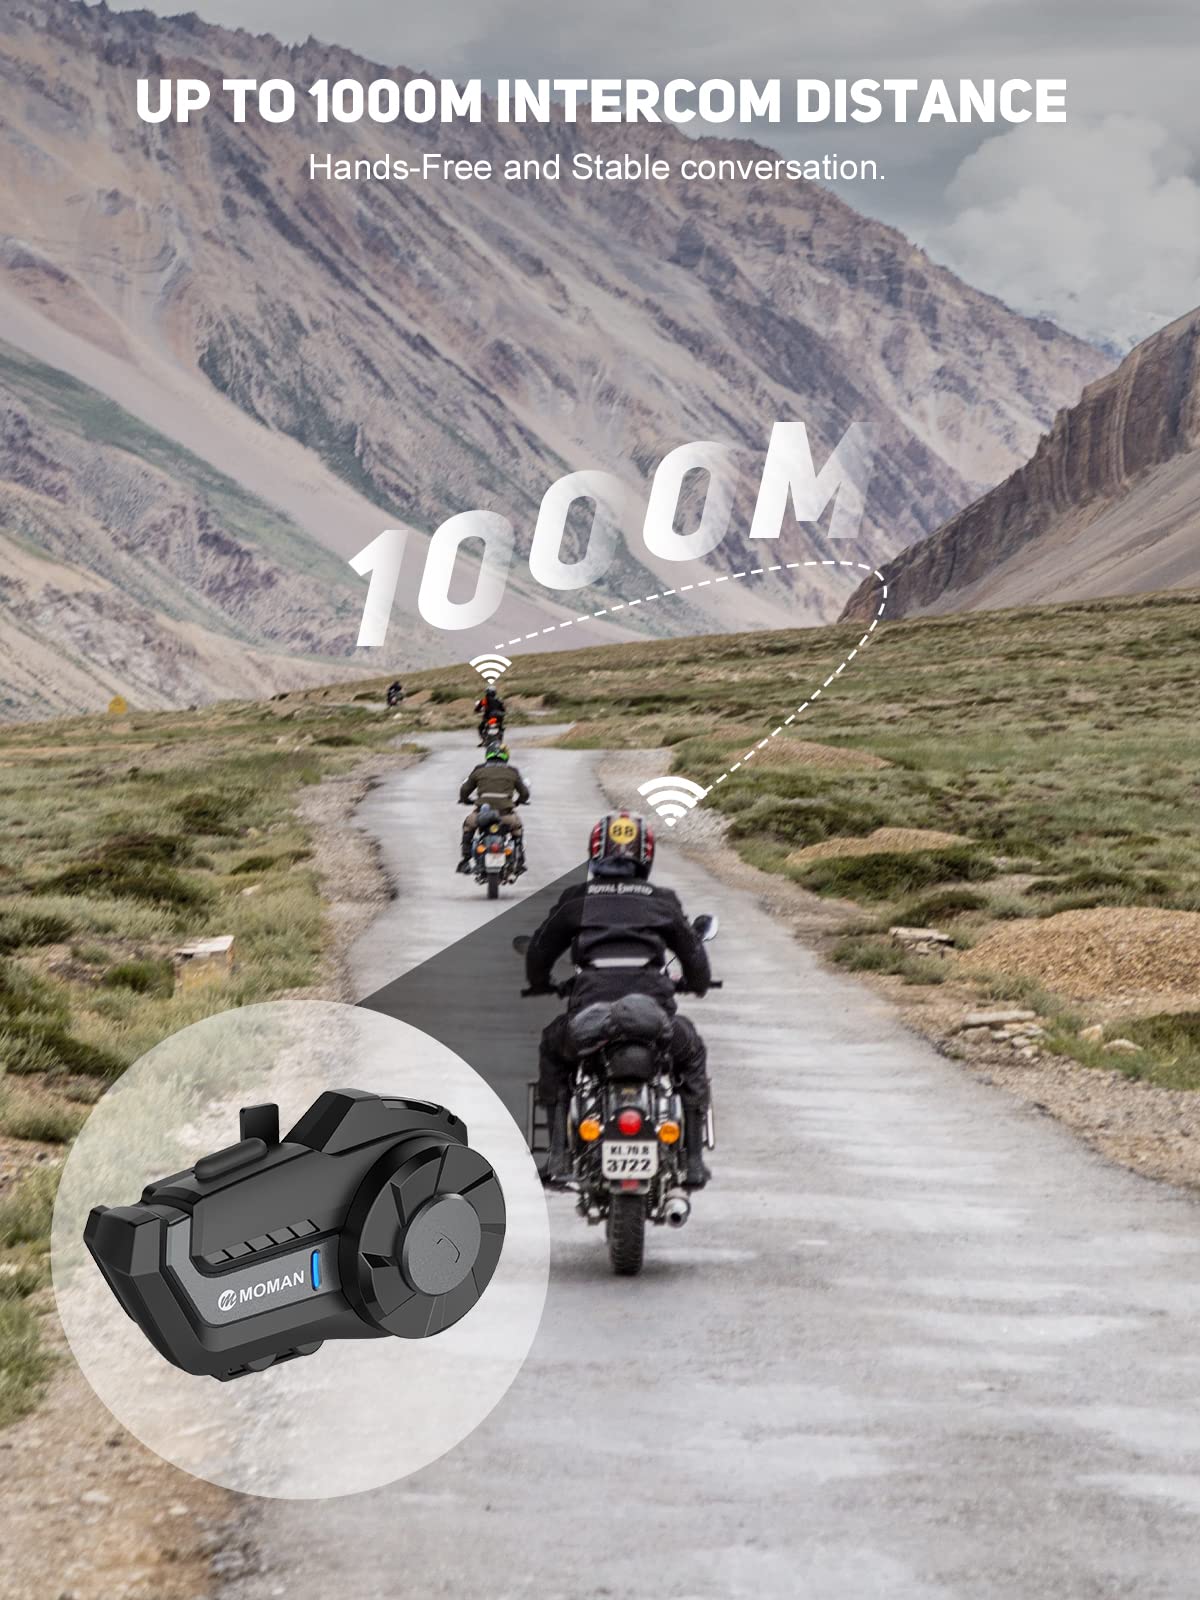 Moman Motorcycle Bluetooth Intercom,H2【2 Pack】Wireless Dirt Bike Helmet Communication System up to 1000M IP65 Waterproof DSP&CVC Noise Cancellation FM Call, Motorbike-Bluetooth-Helmet-Intercom-Headset